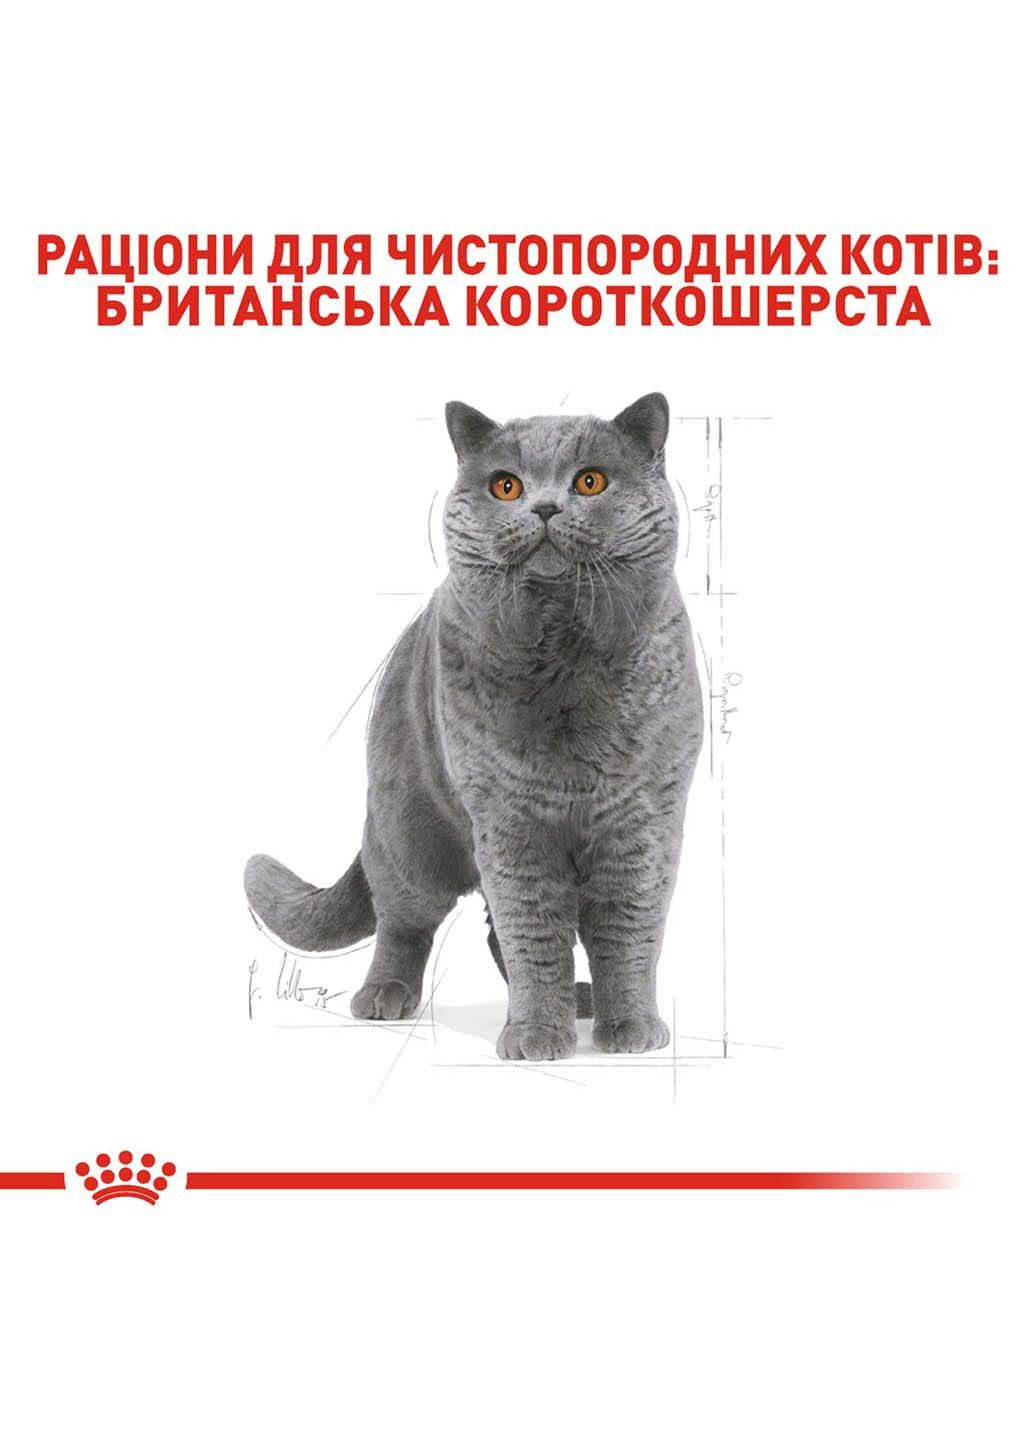 Сухий корм для дорослих кішок Shorthair Adult 10 кг Royal Canin (286472681)